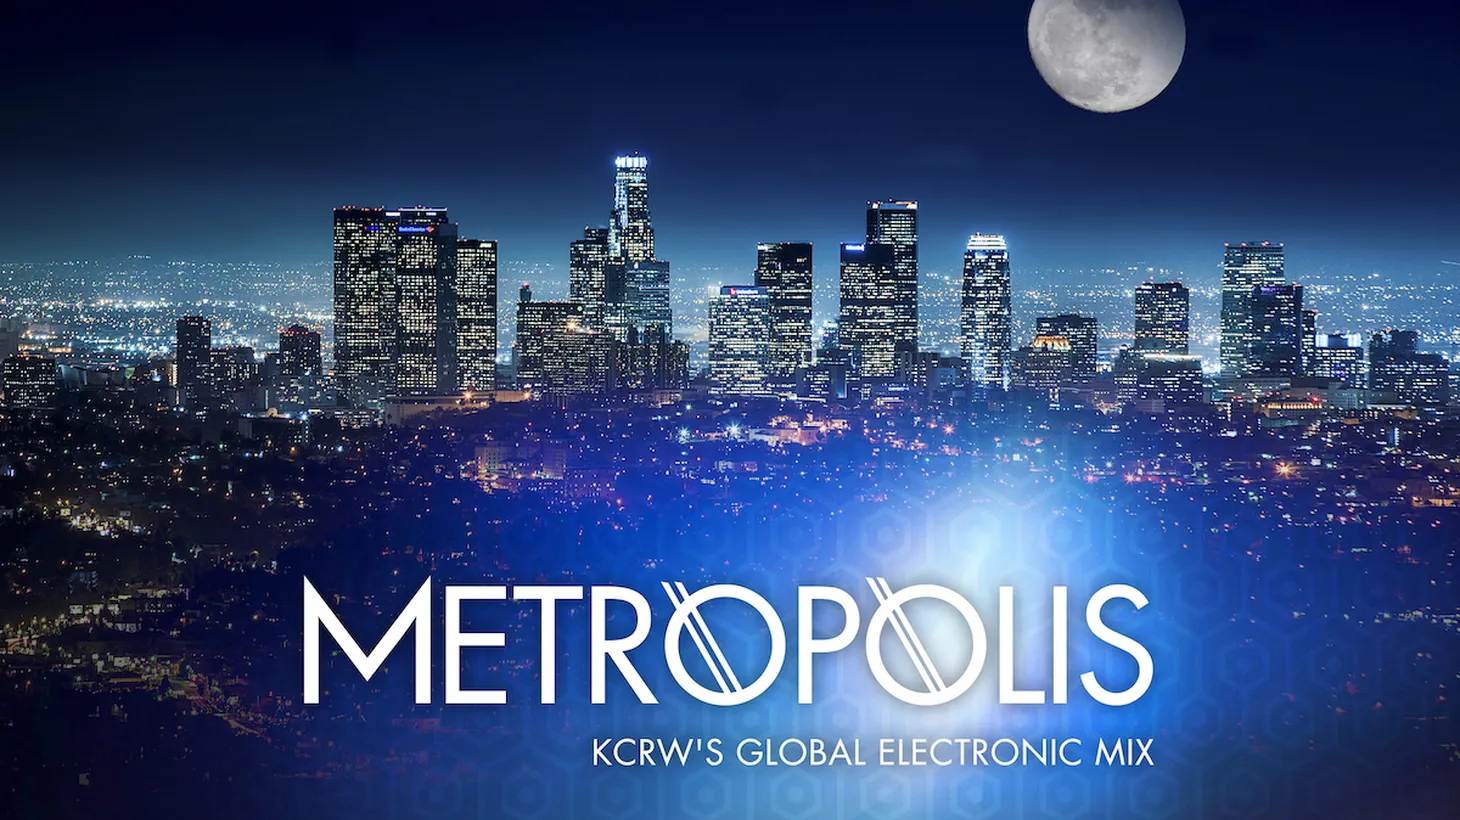 Metropolis playlist, March 5, 2022.